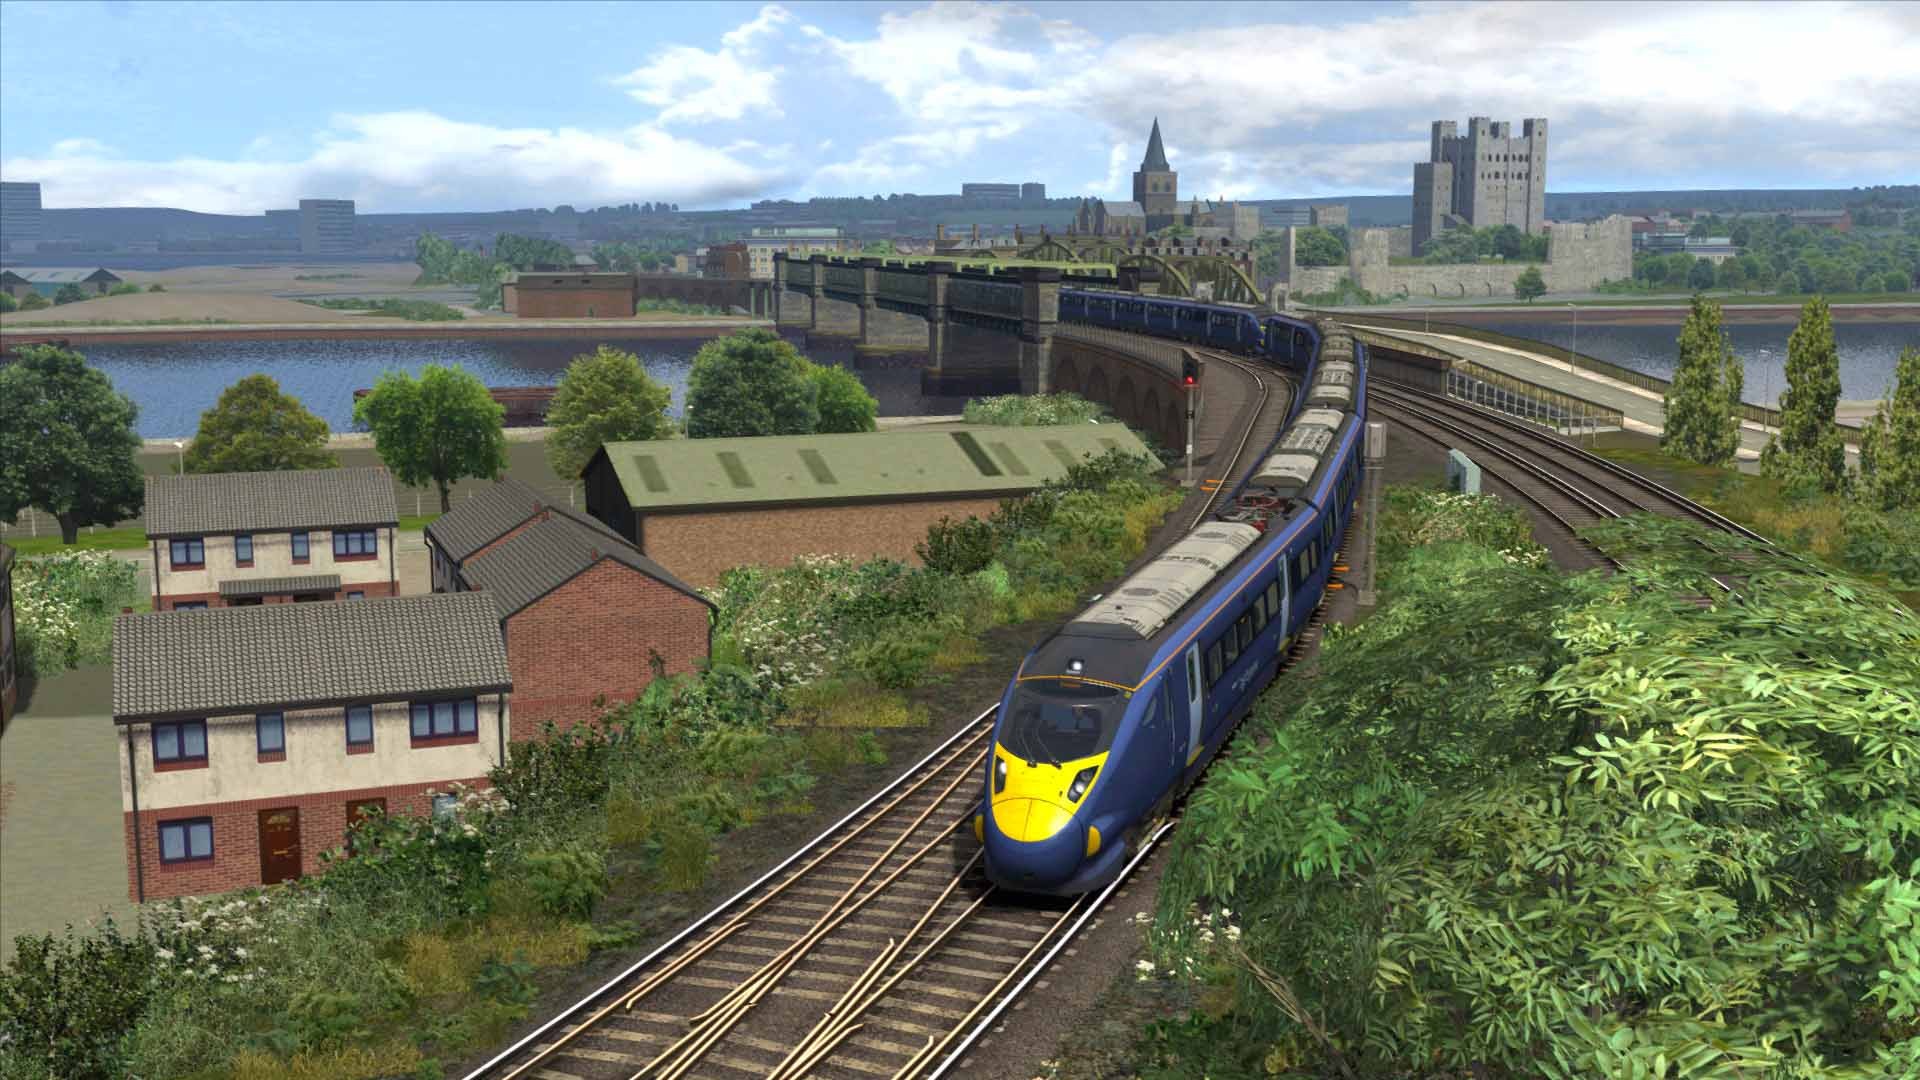 train simulator 2014 free play